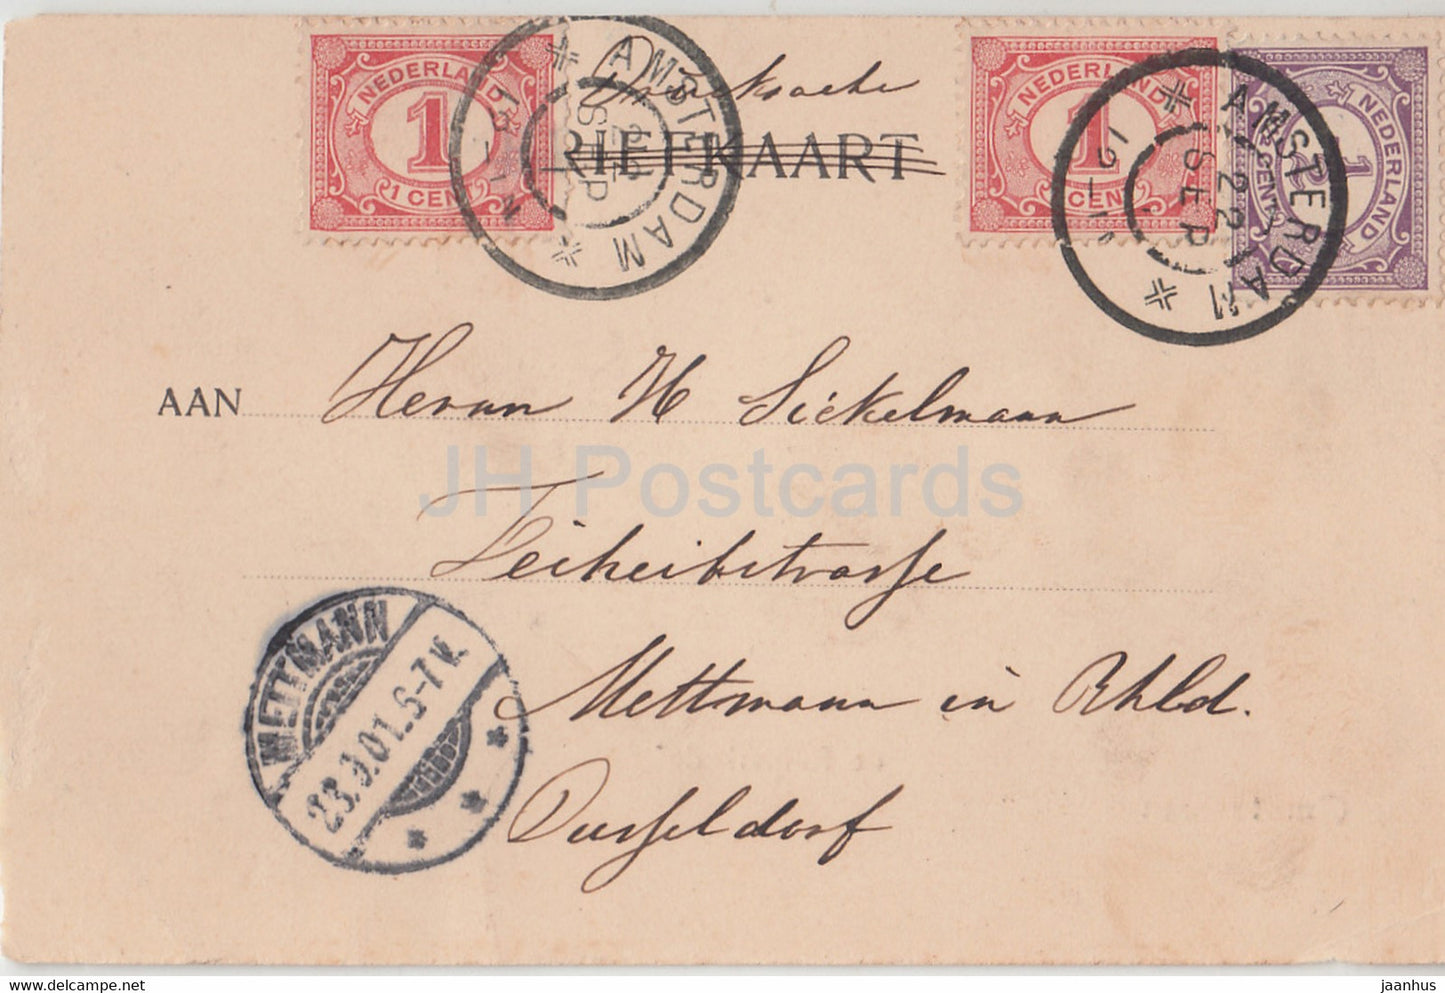 Amsterdam - de Ruijterkade - ship - old postcard - 1901 - Netherlands - used